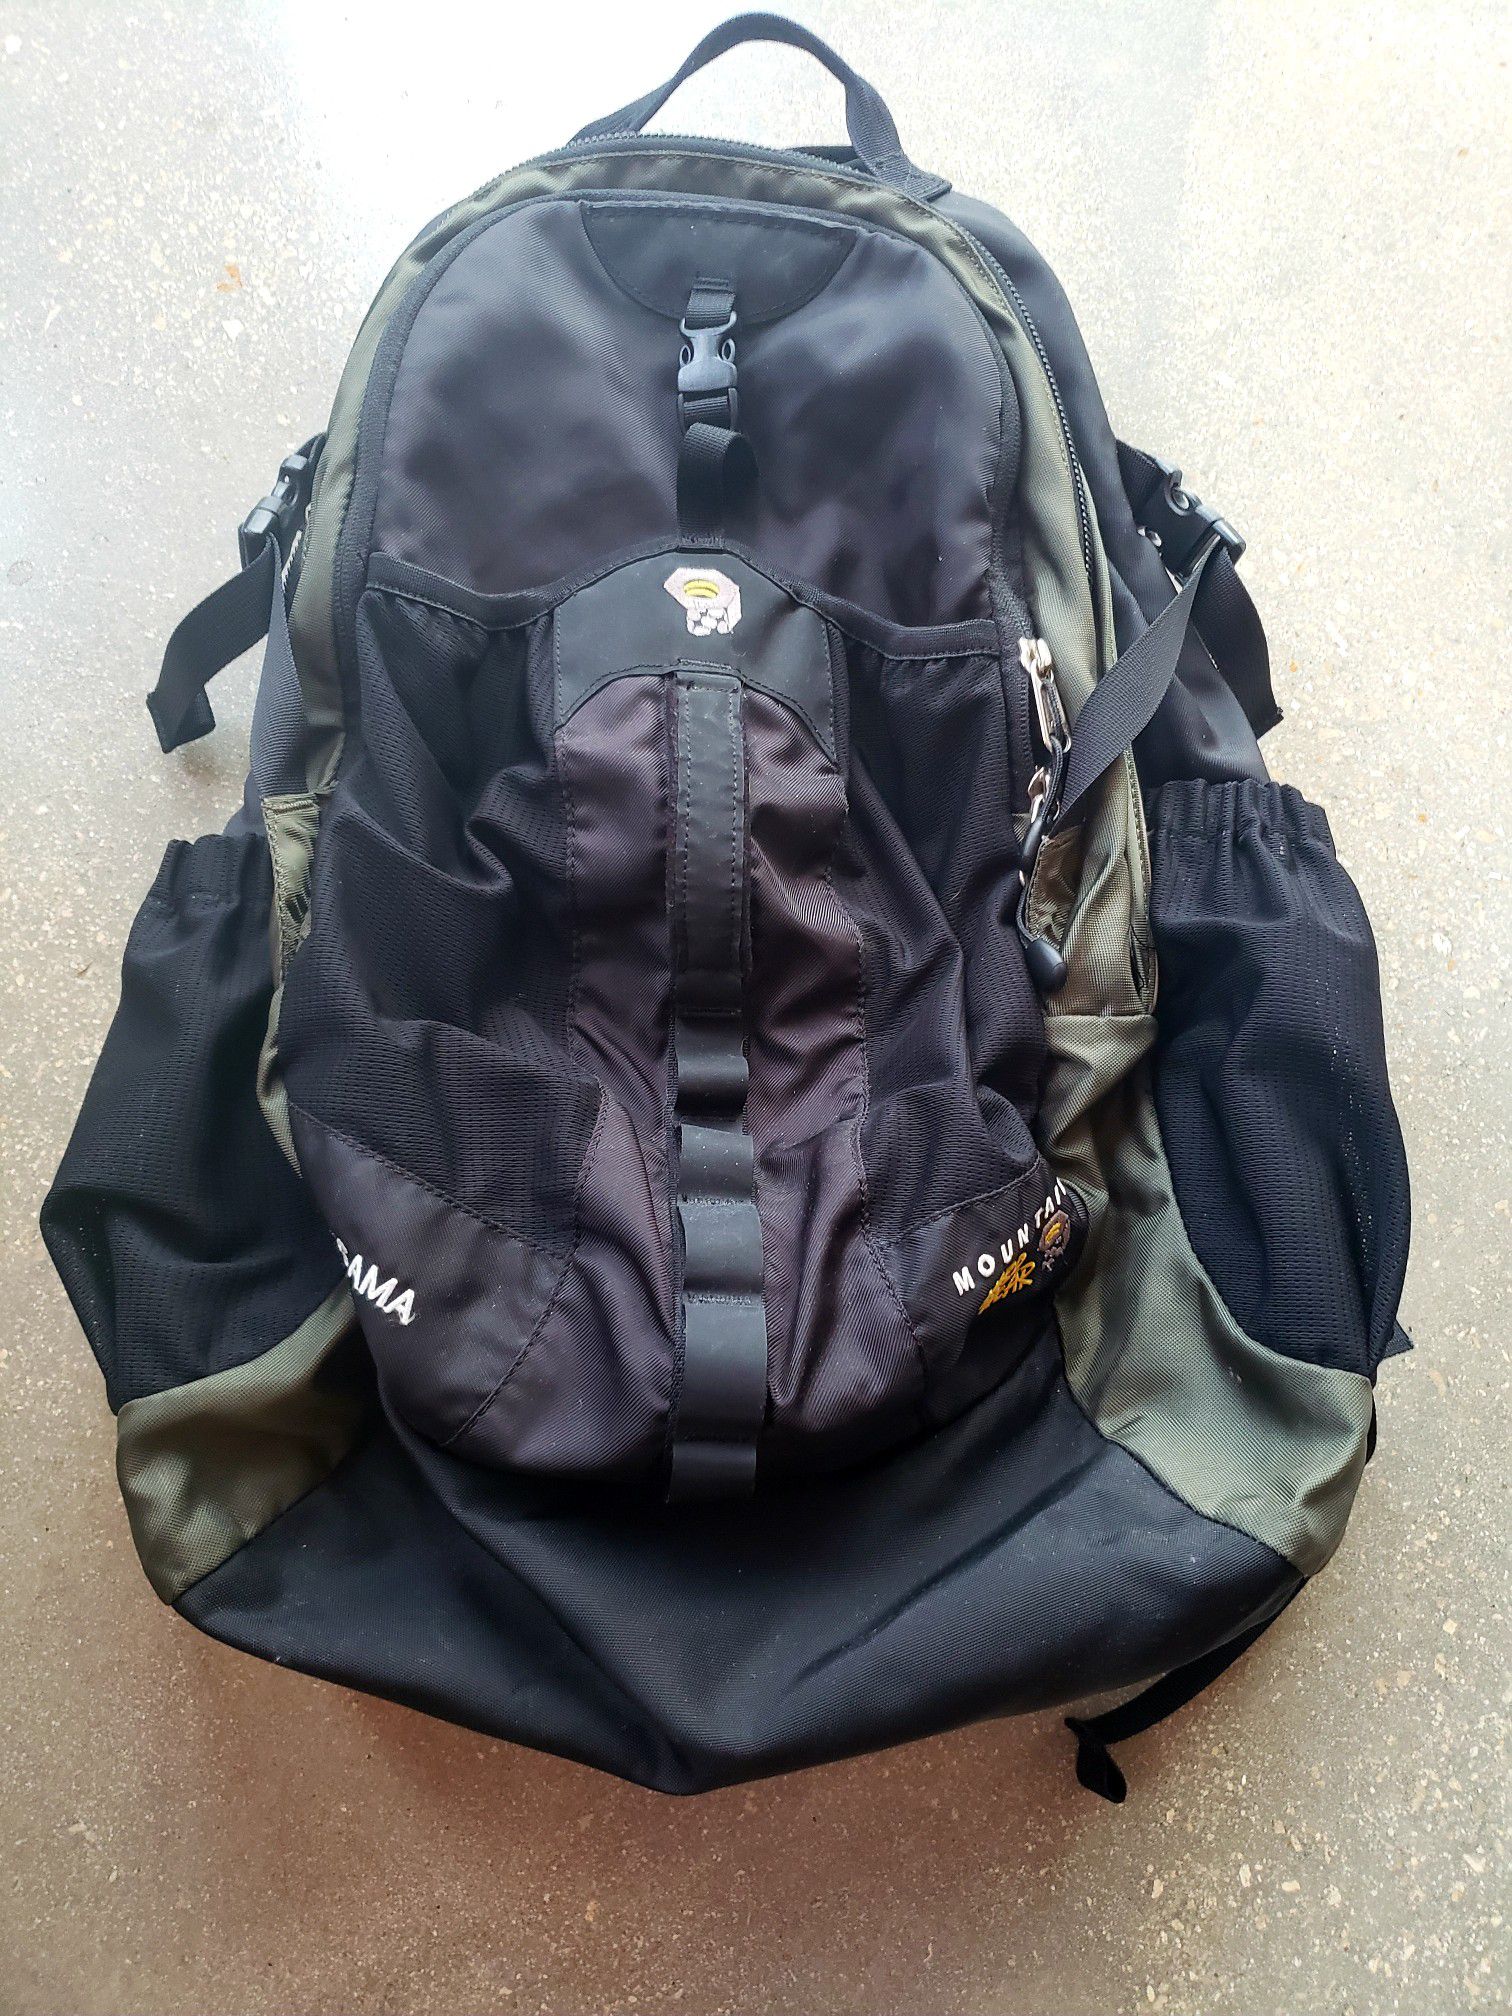 Mountain Hardwear "Agama" Hiking/Laptop Backpack